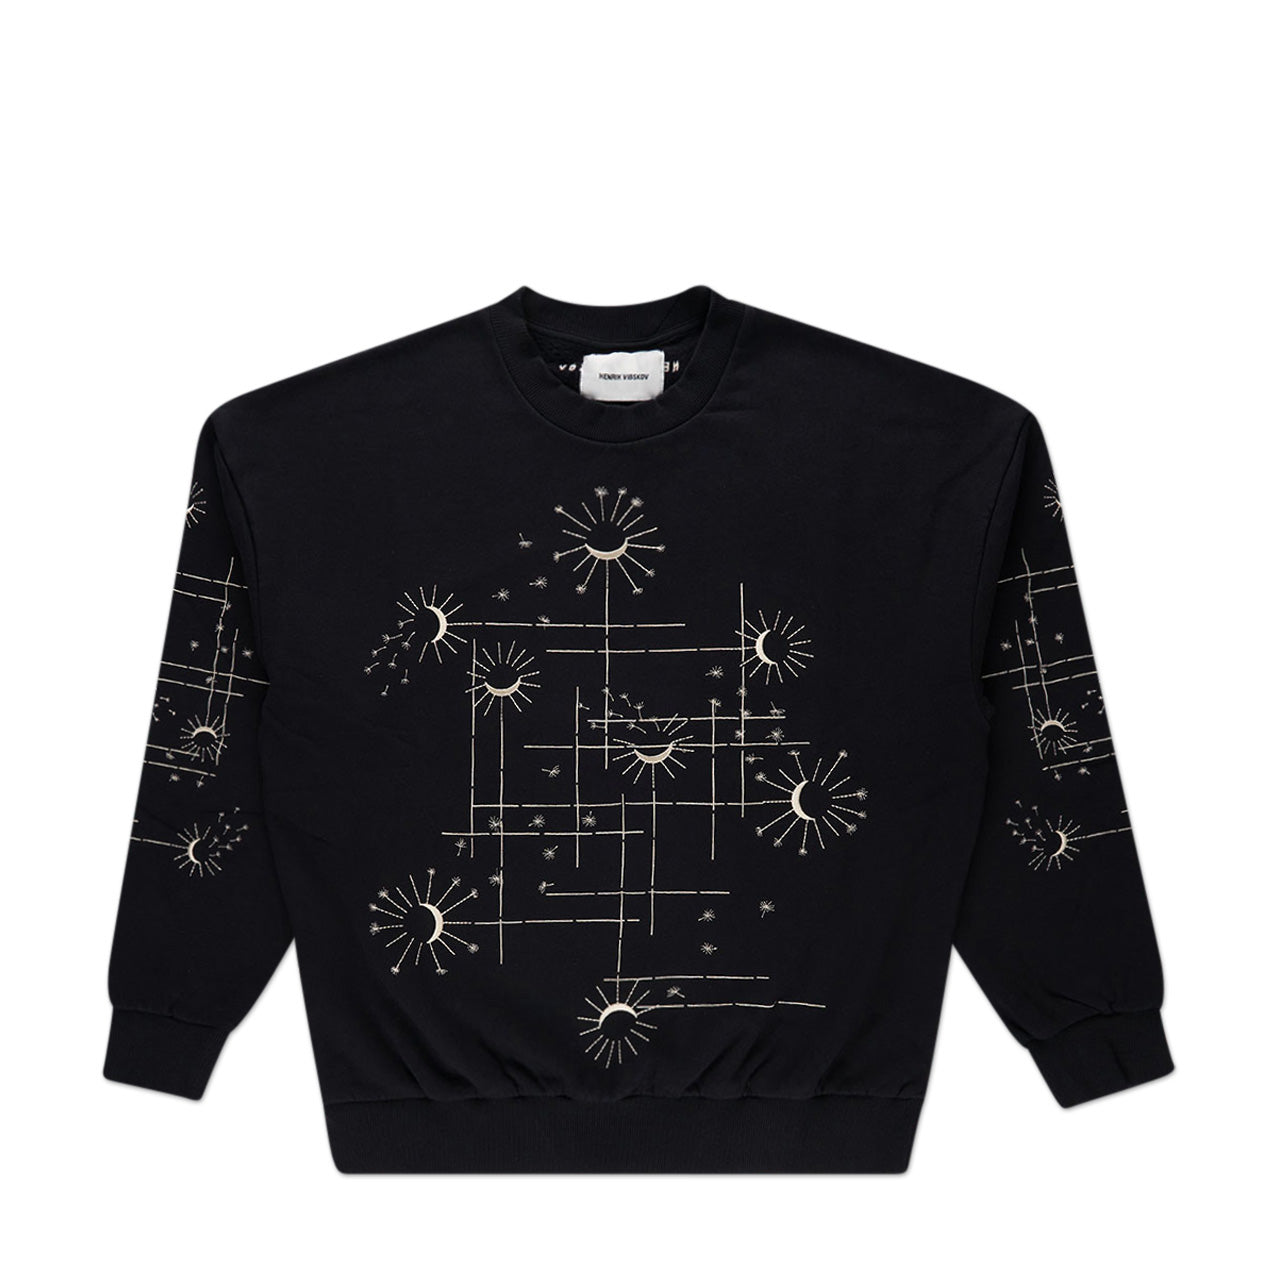 henrik vibskov sun moon sweater (black)